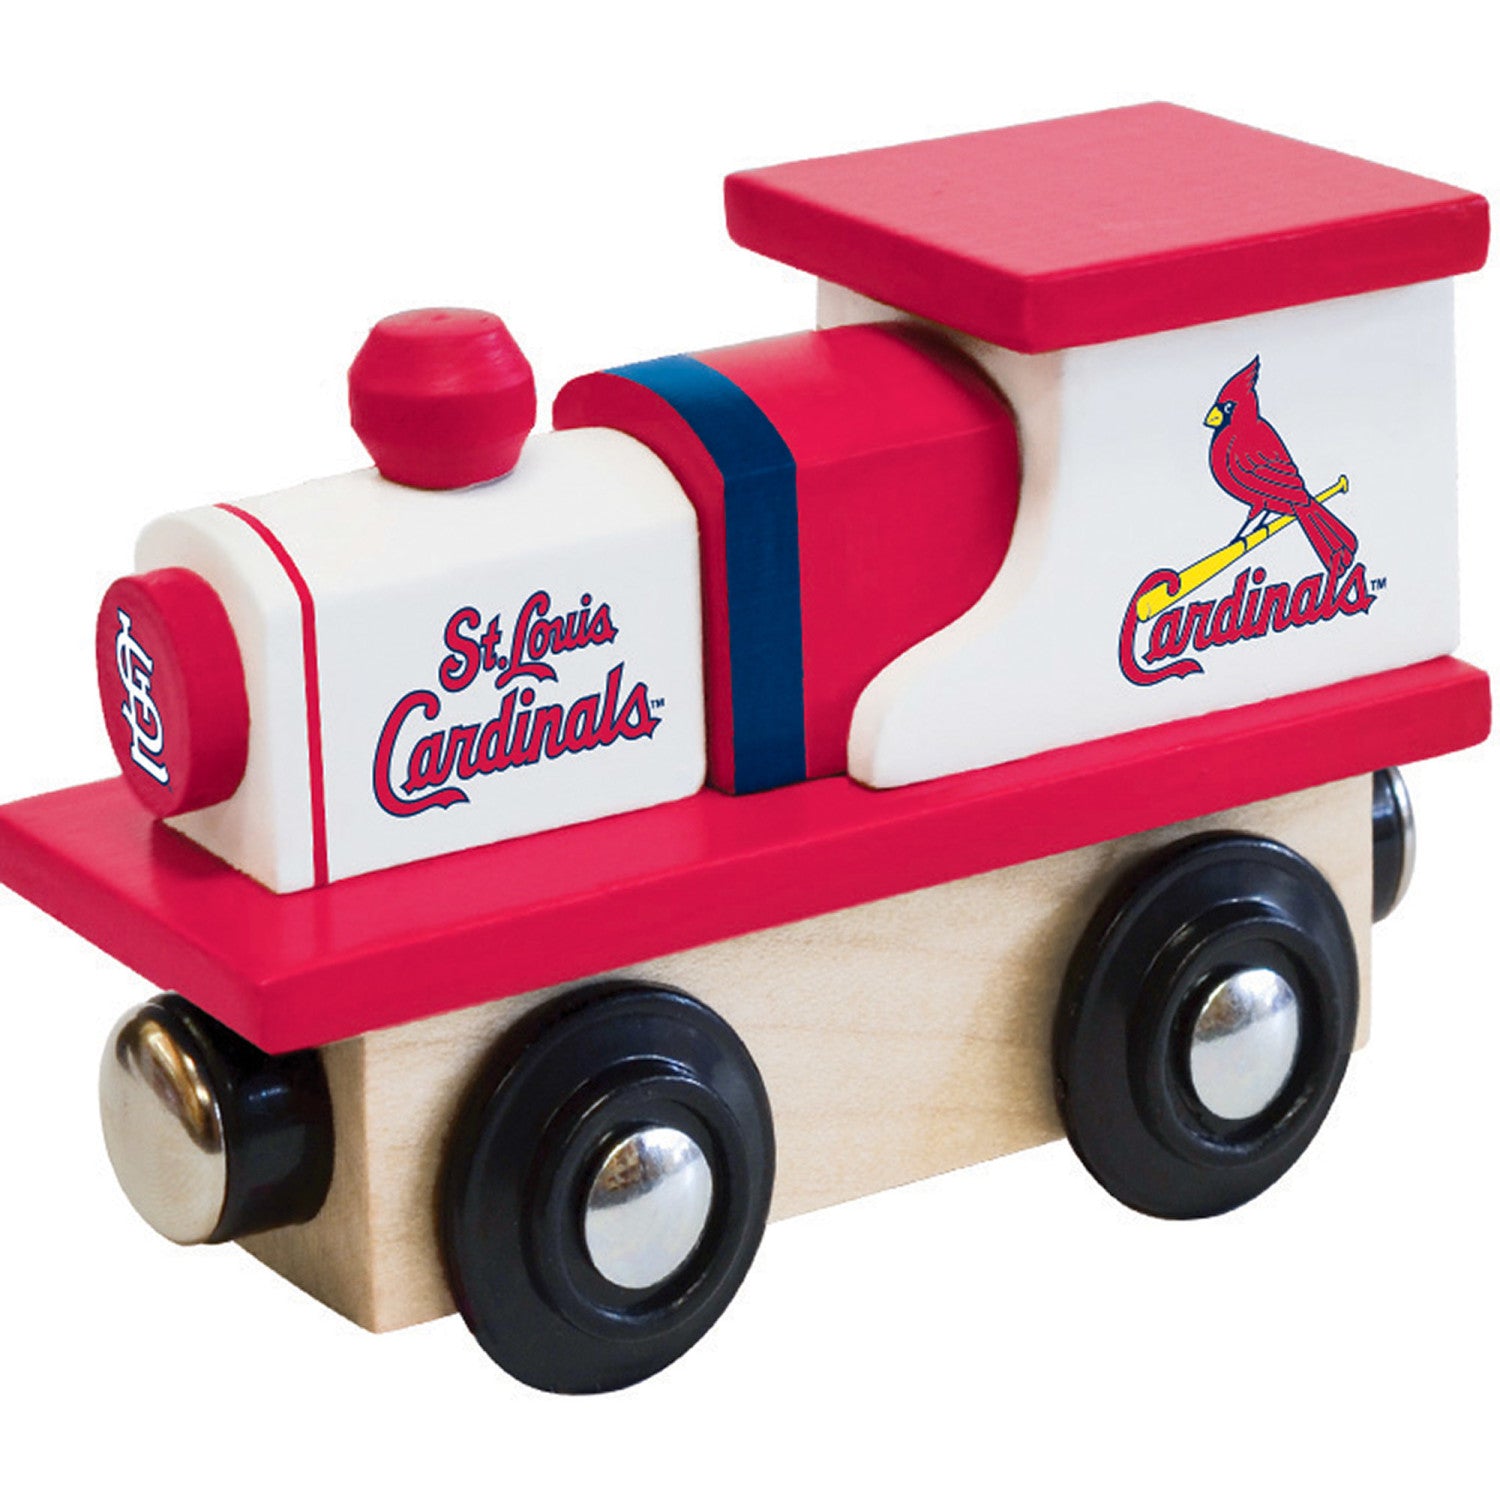 St. Louis Cardinals Toy Train Engine